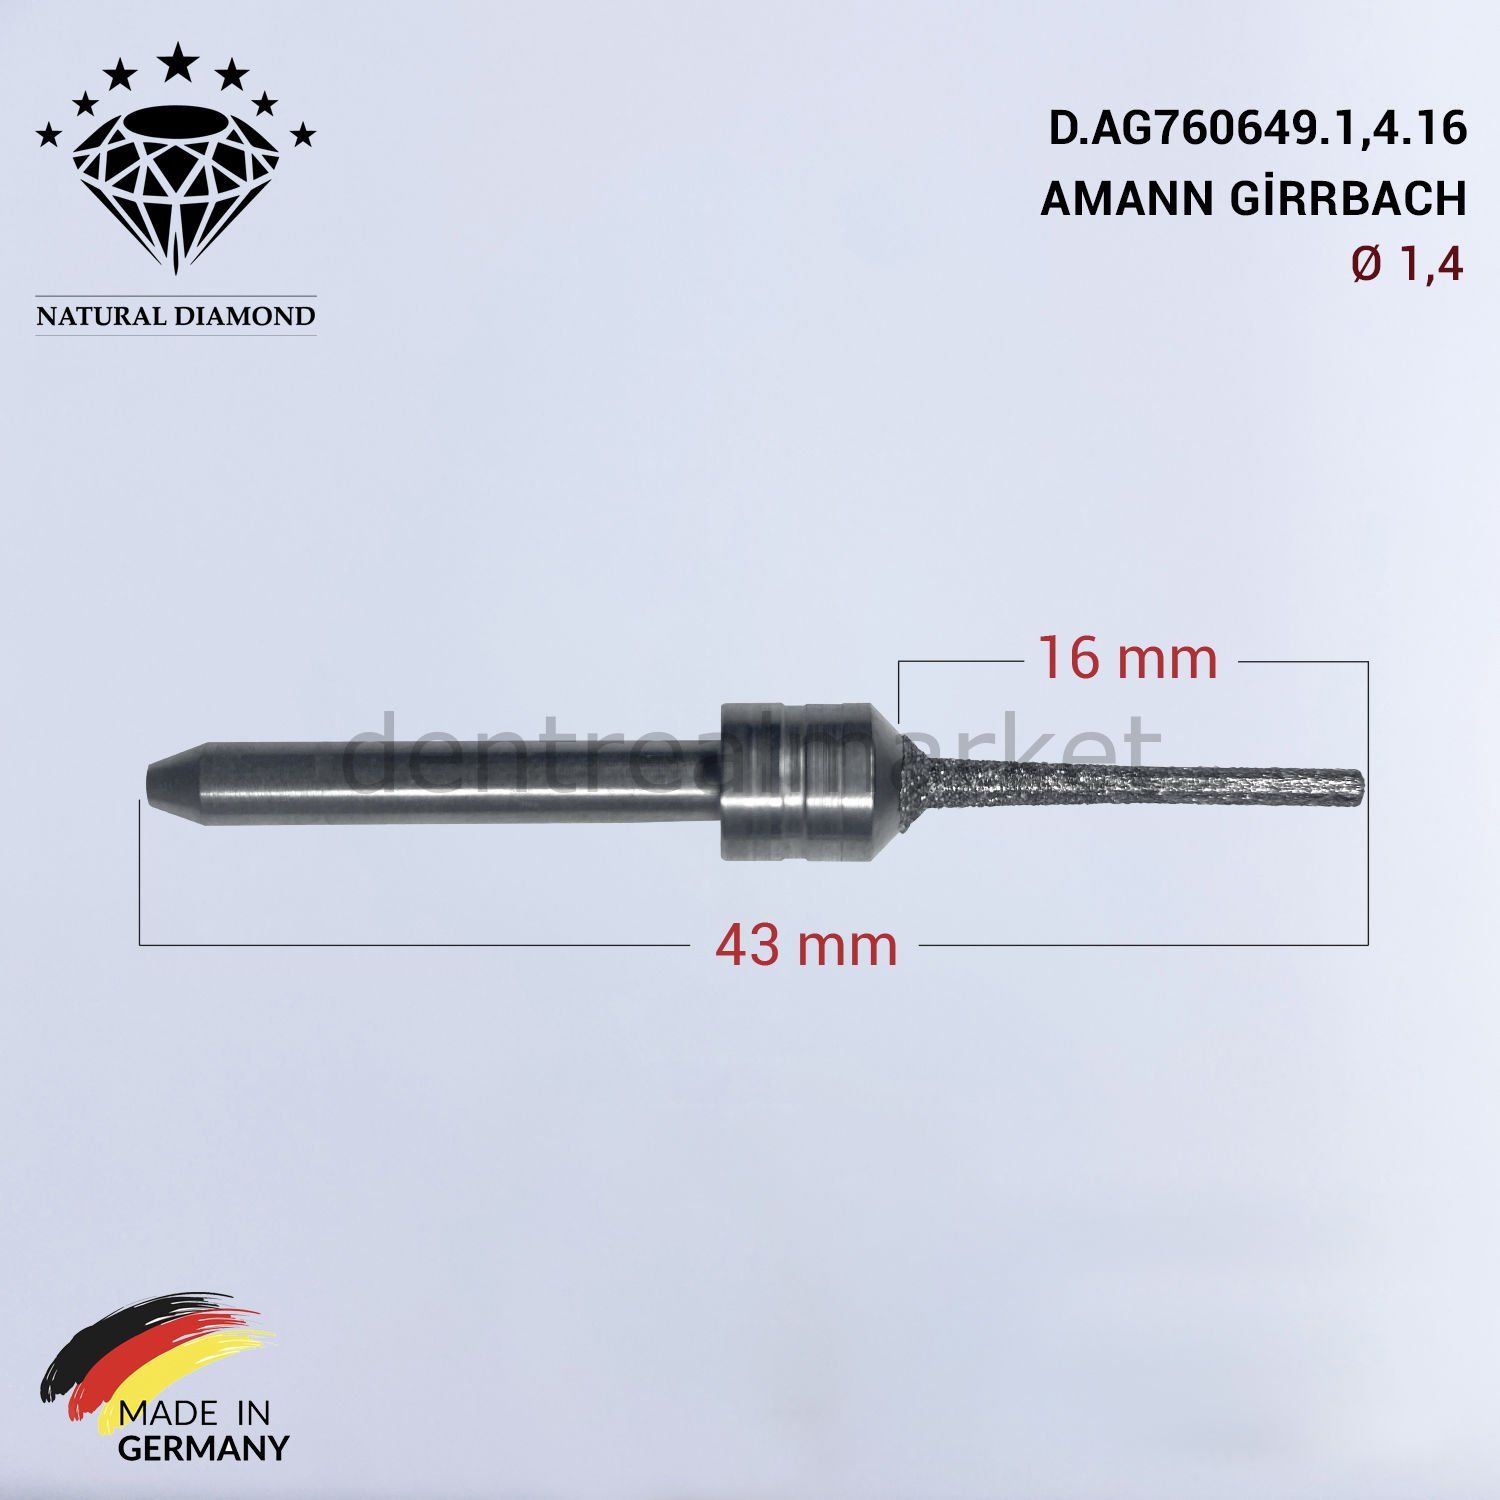 Amann Girrbach Elmas Cad Cam Drill 1,4 mm